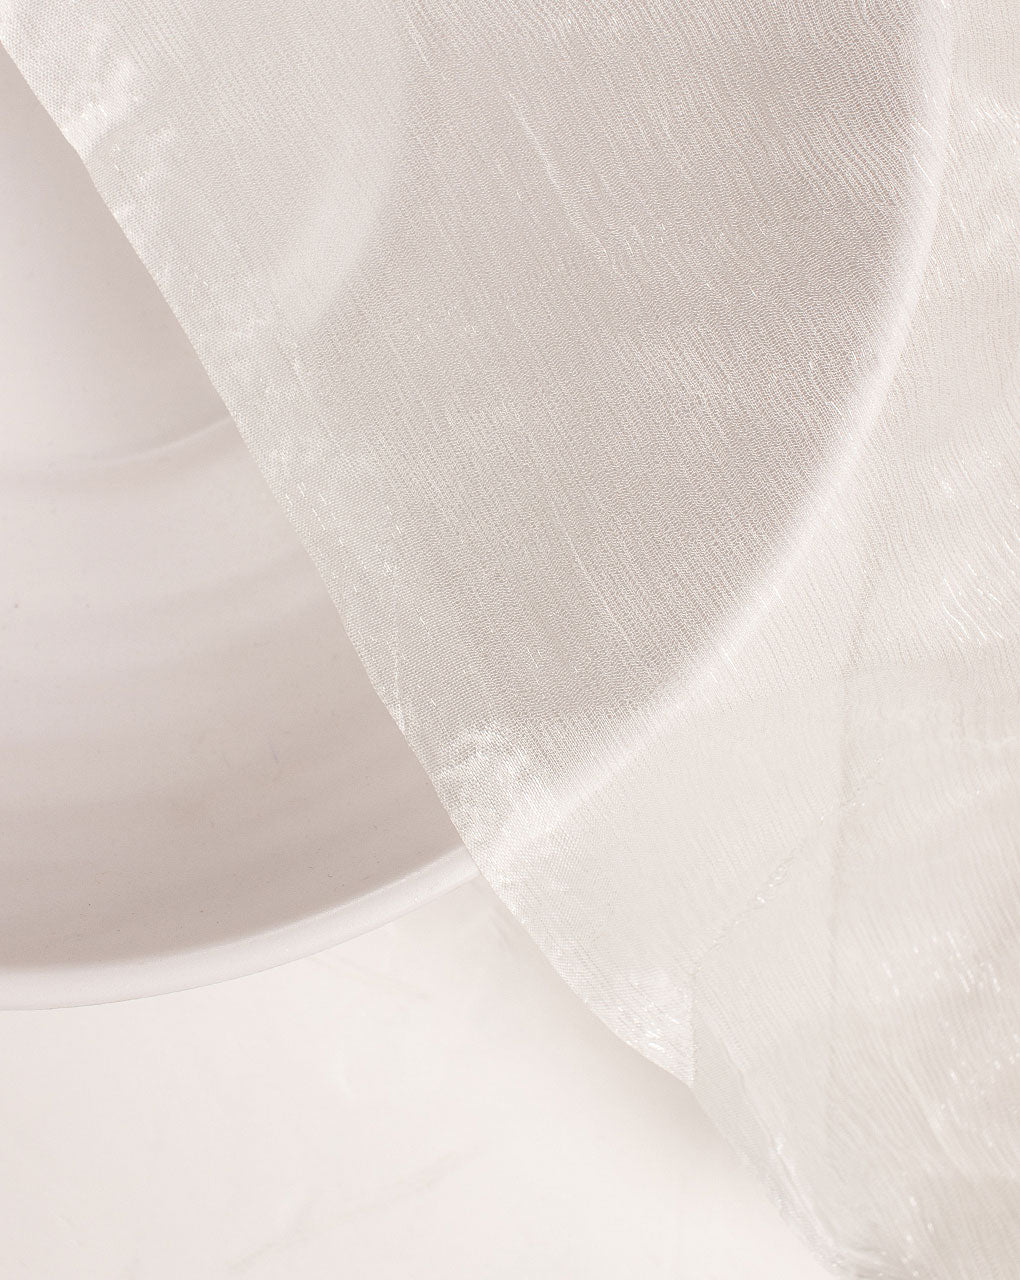 30's Dyeable Shimmer Chiffon Fabric - Fabriclore.com